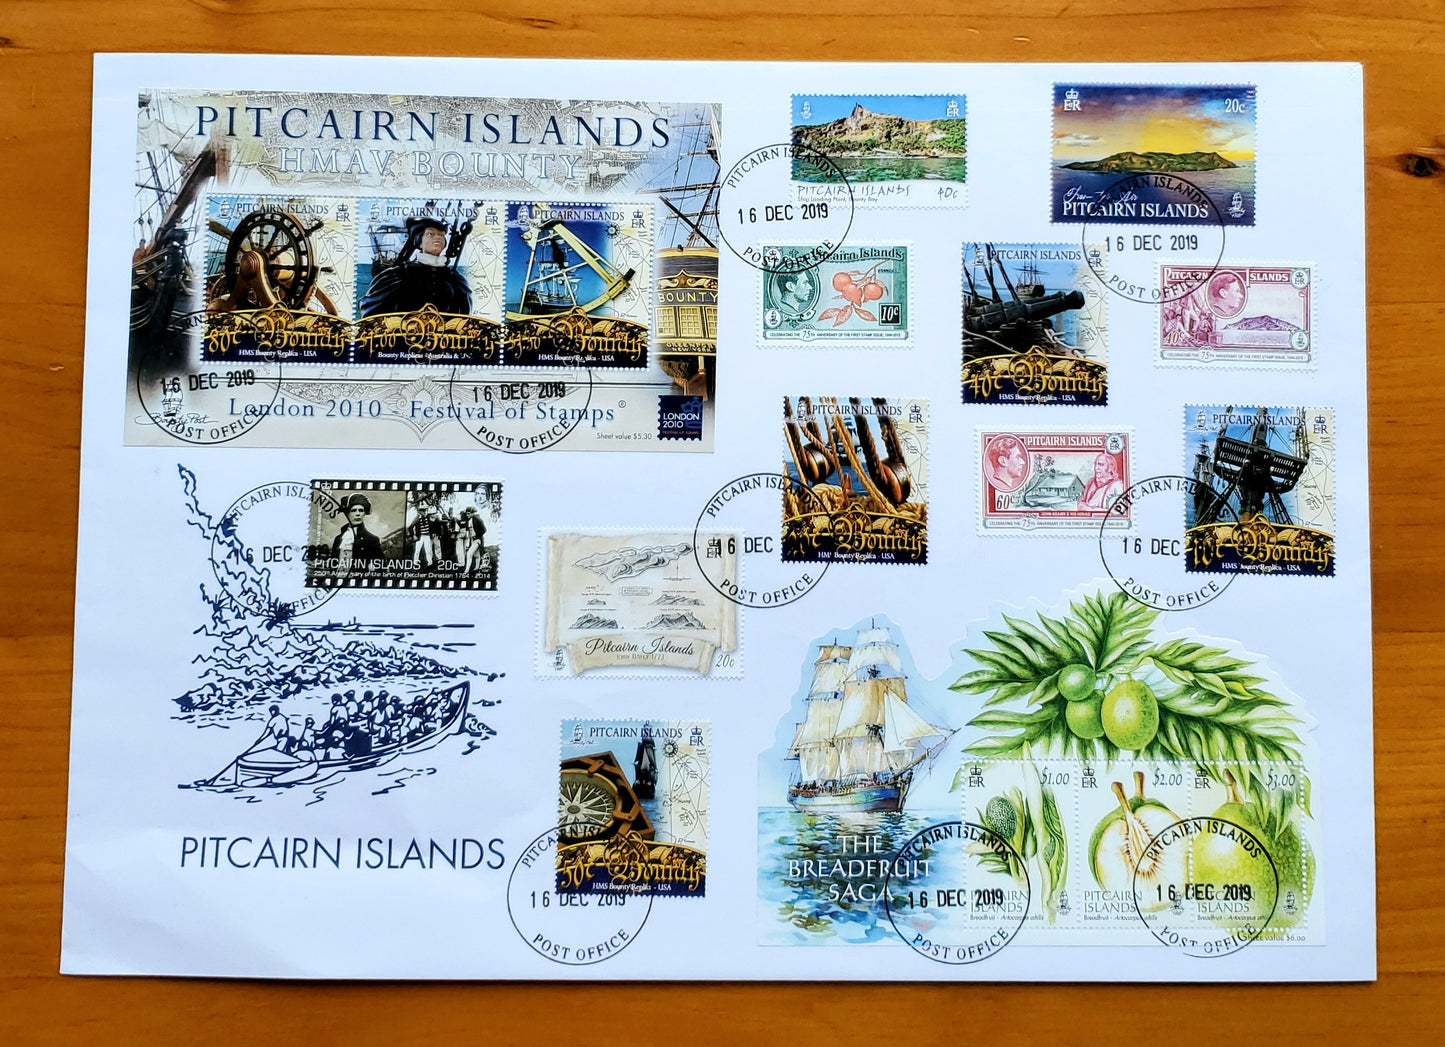 HMAV Bounty and Pitcairn's Breadfruit Saga Stamp Set